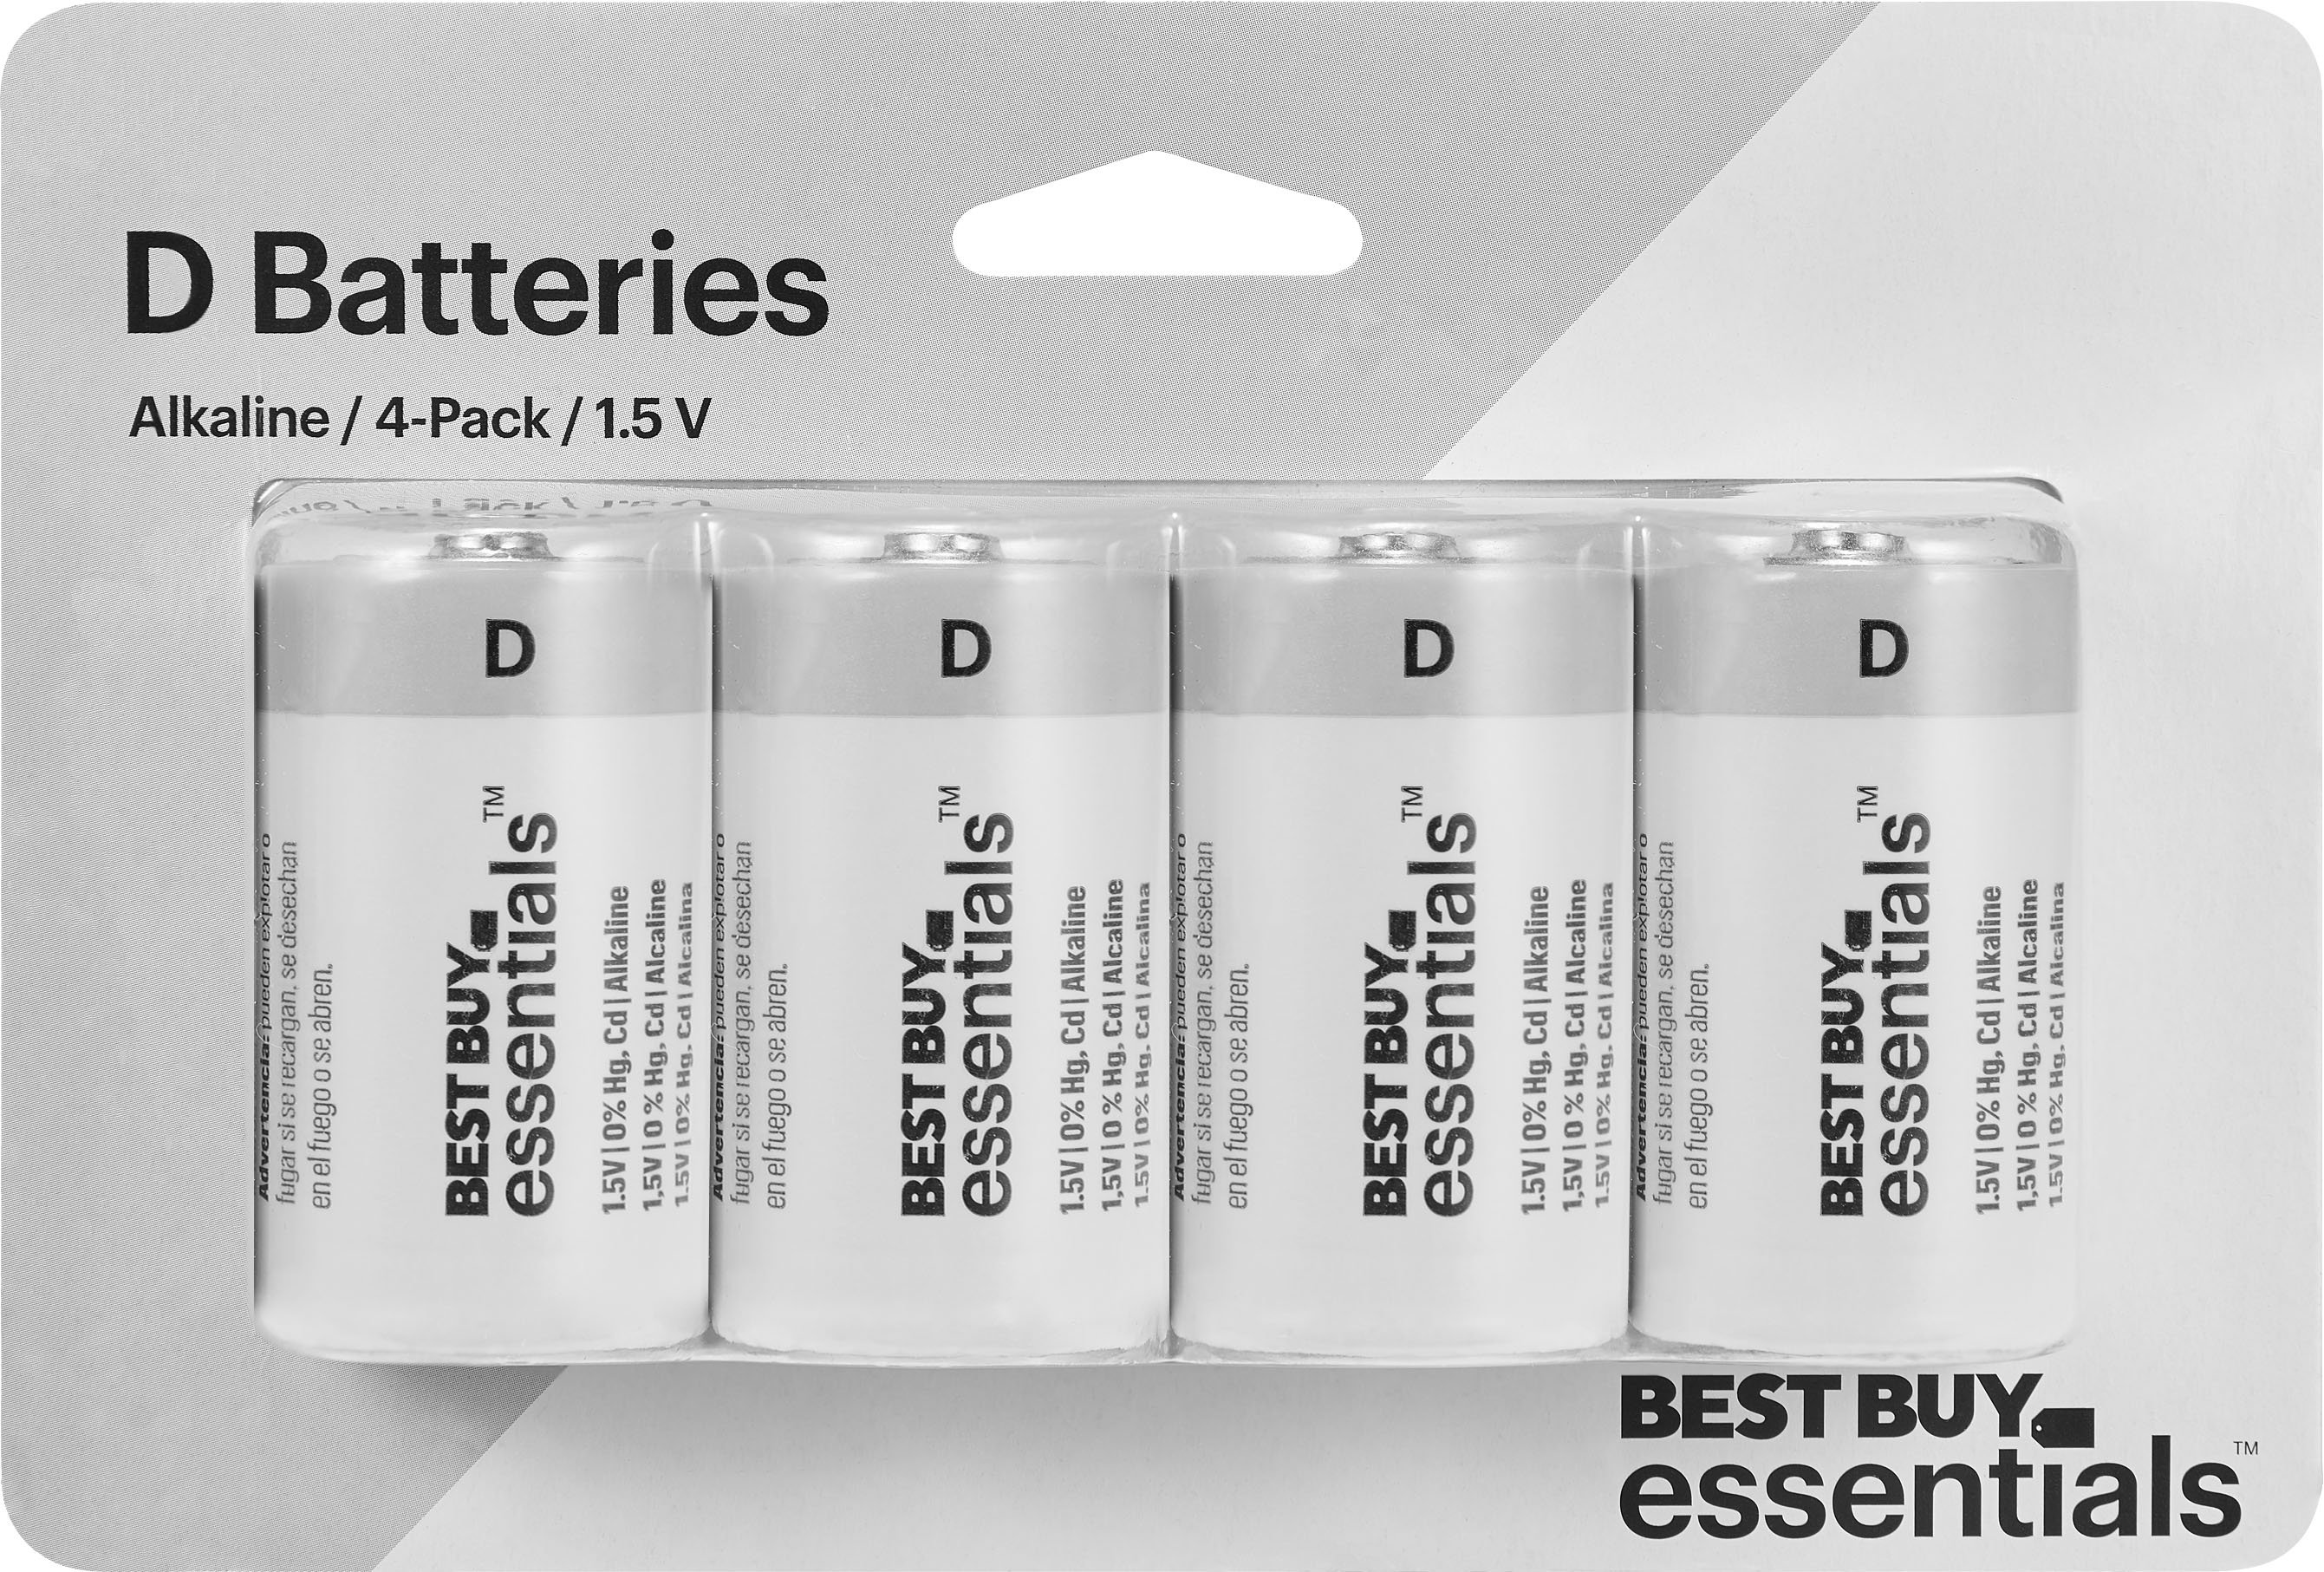 Best Buy essentials™ - D Batteries (4-Pack)